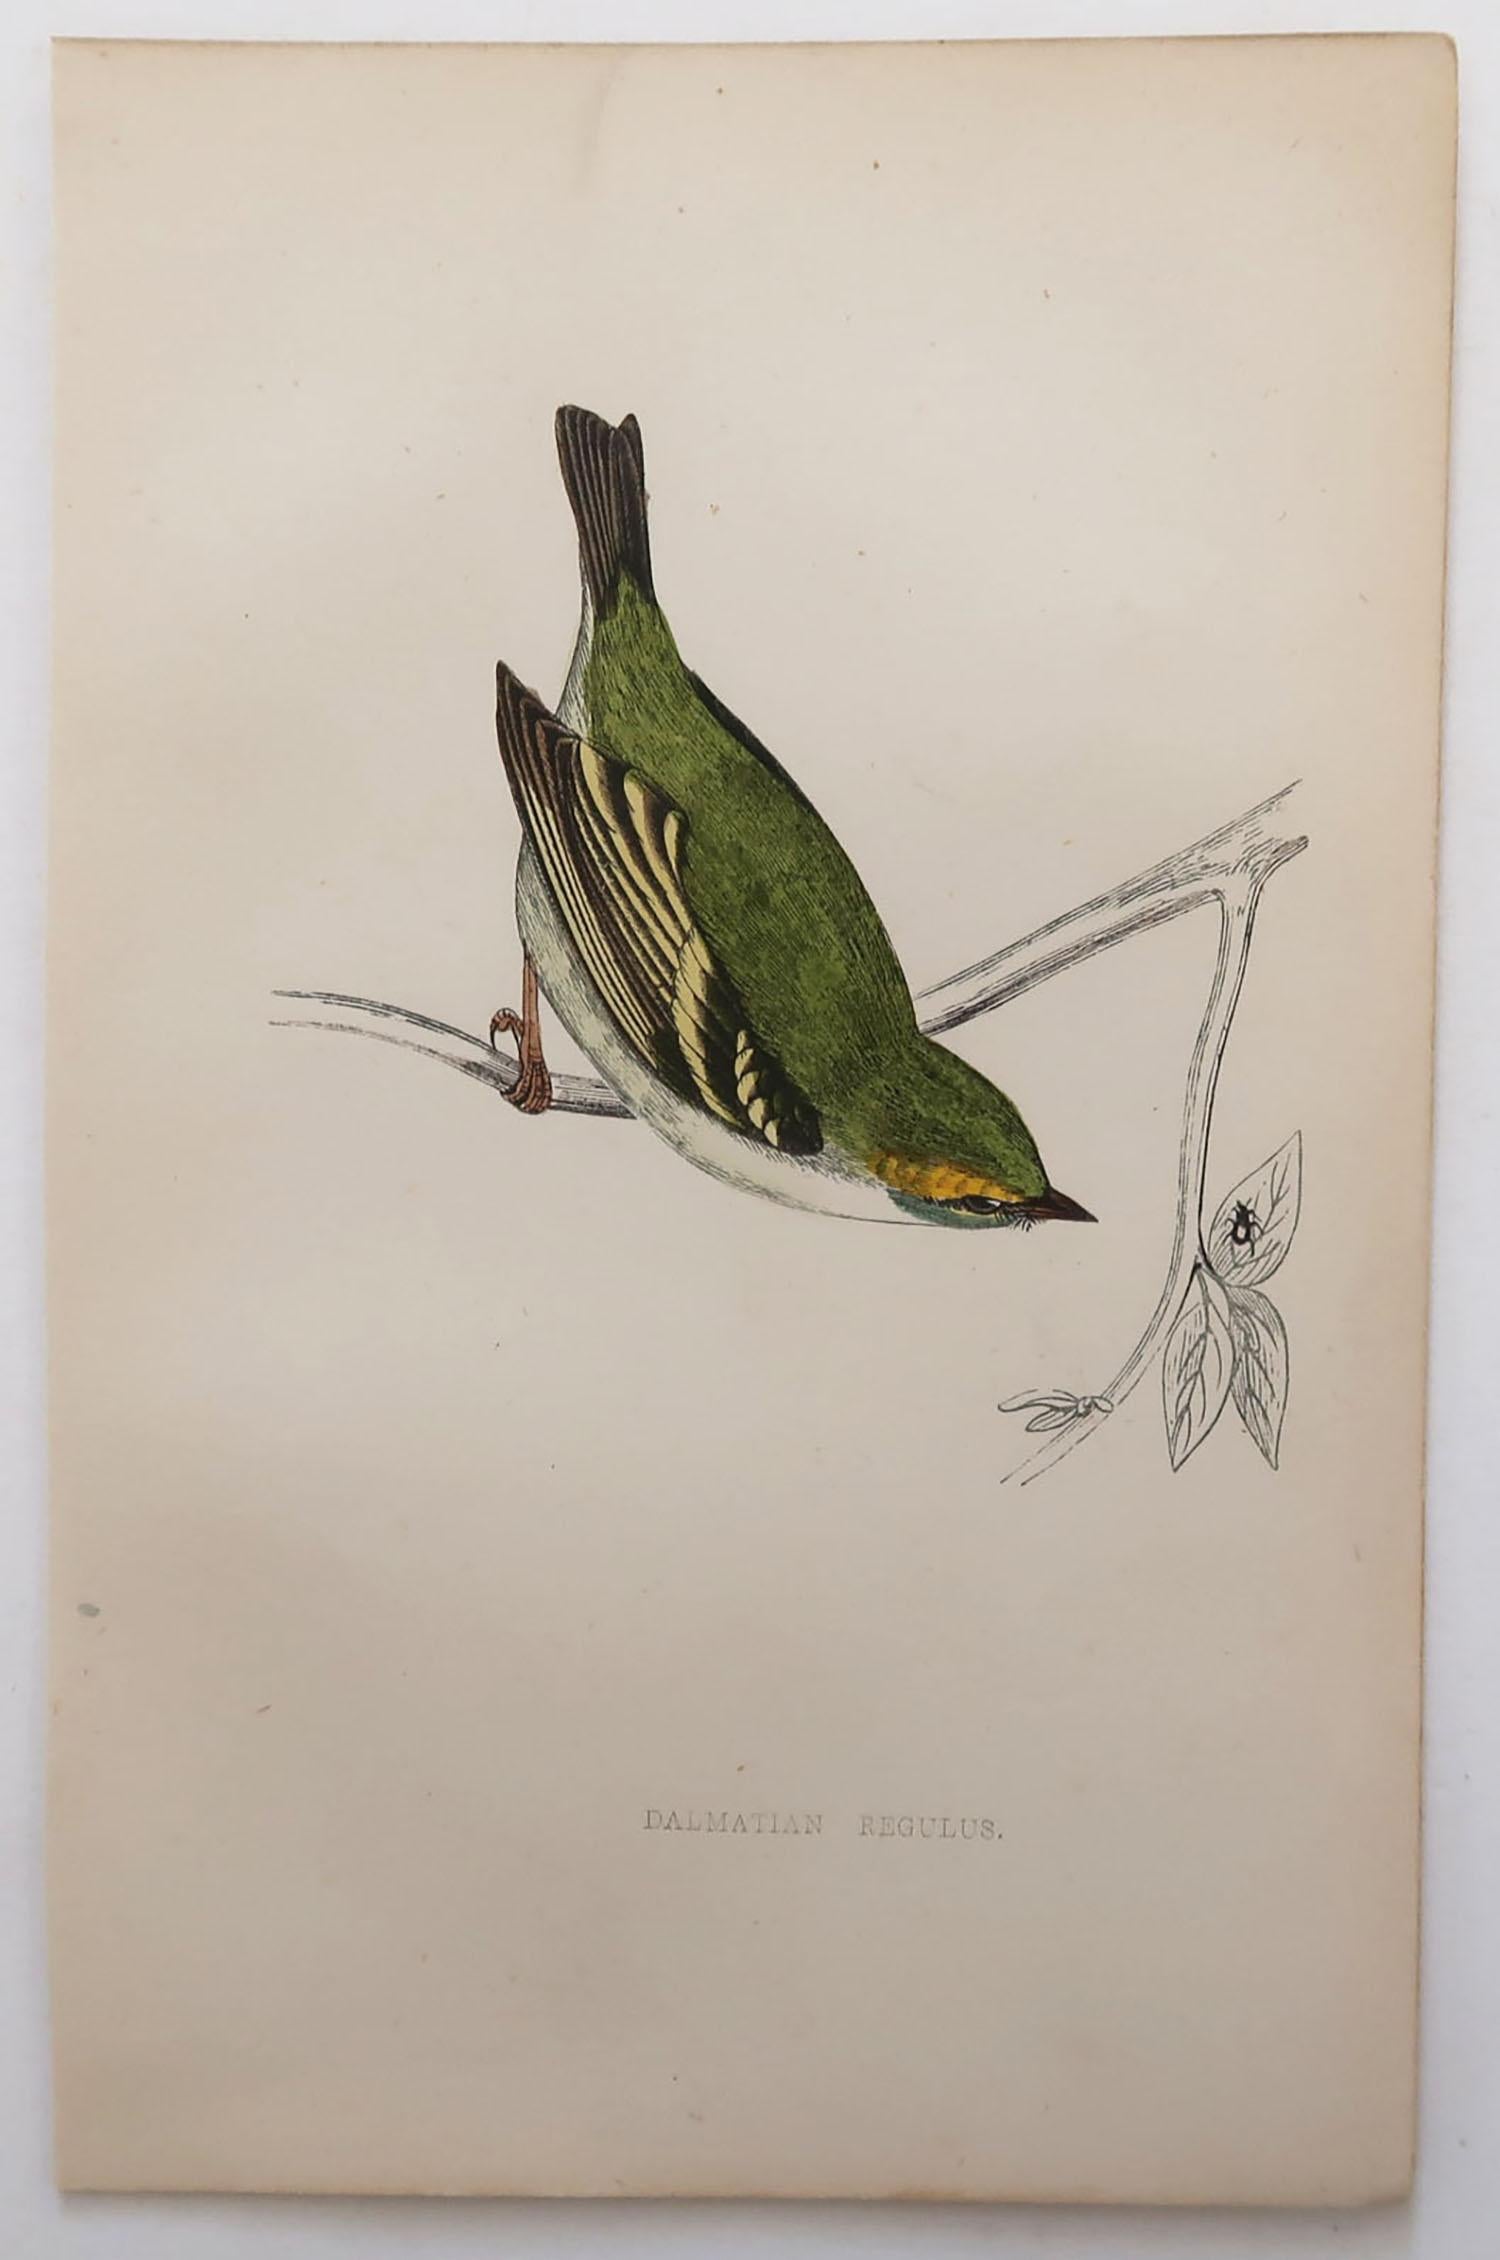 Folk Art Original Antique Bird Print, the Dalmation Regulus, circa 1870